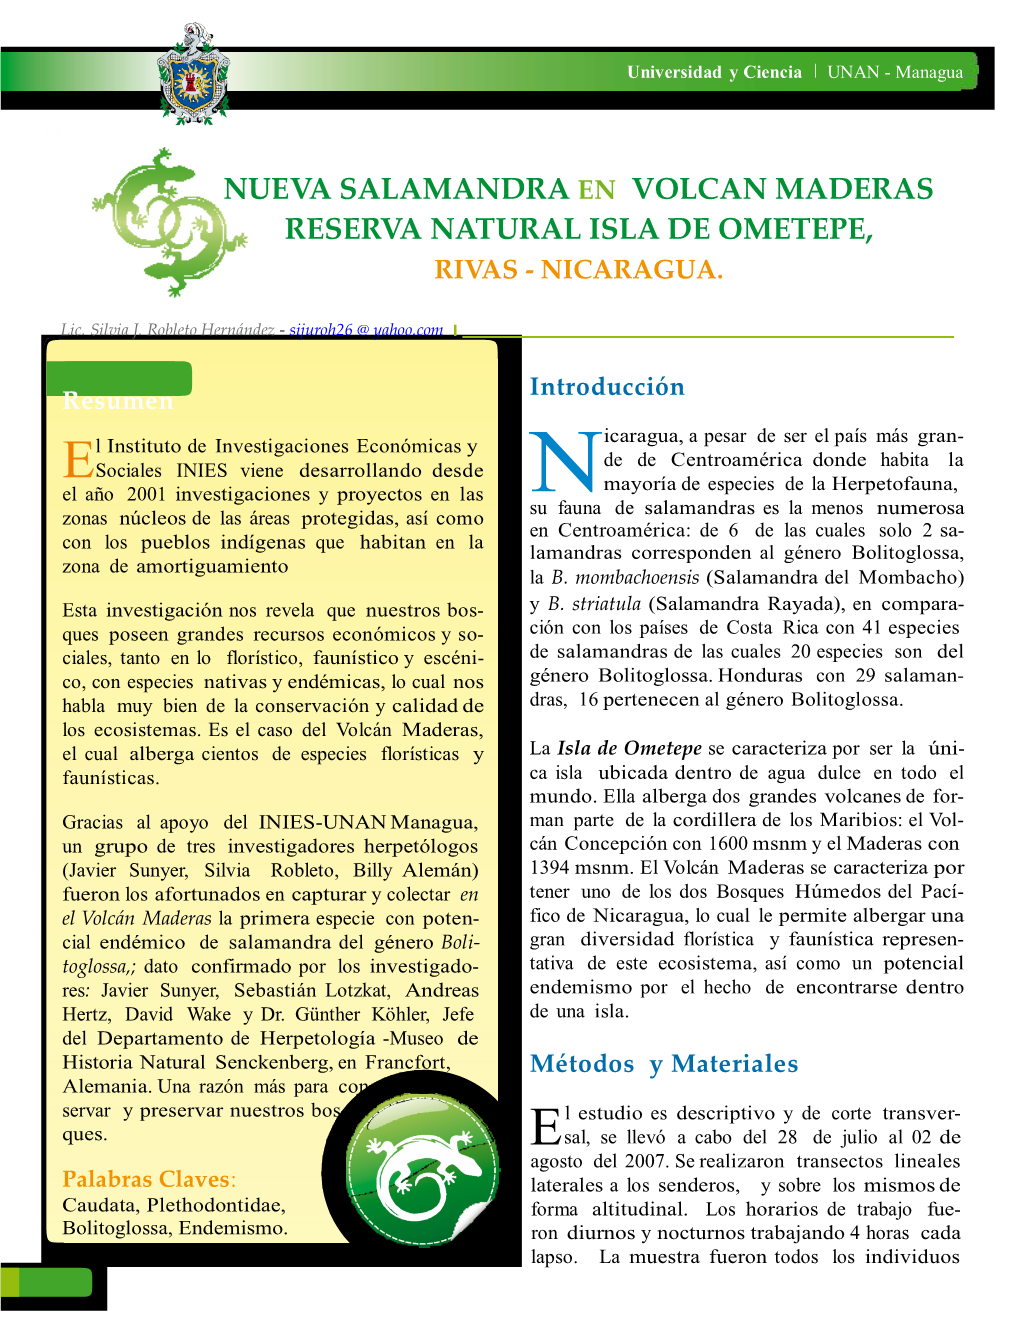 Nueva Salamandra En Volcan Maderas Reserva Natural Isla De Ometepe, Rivas - Nicaragua